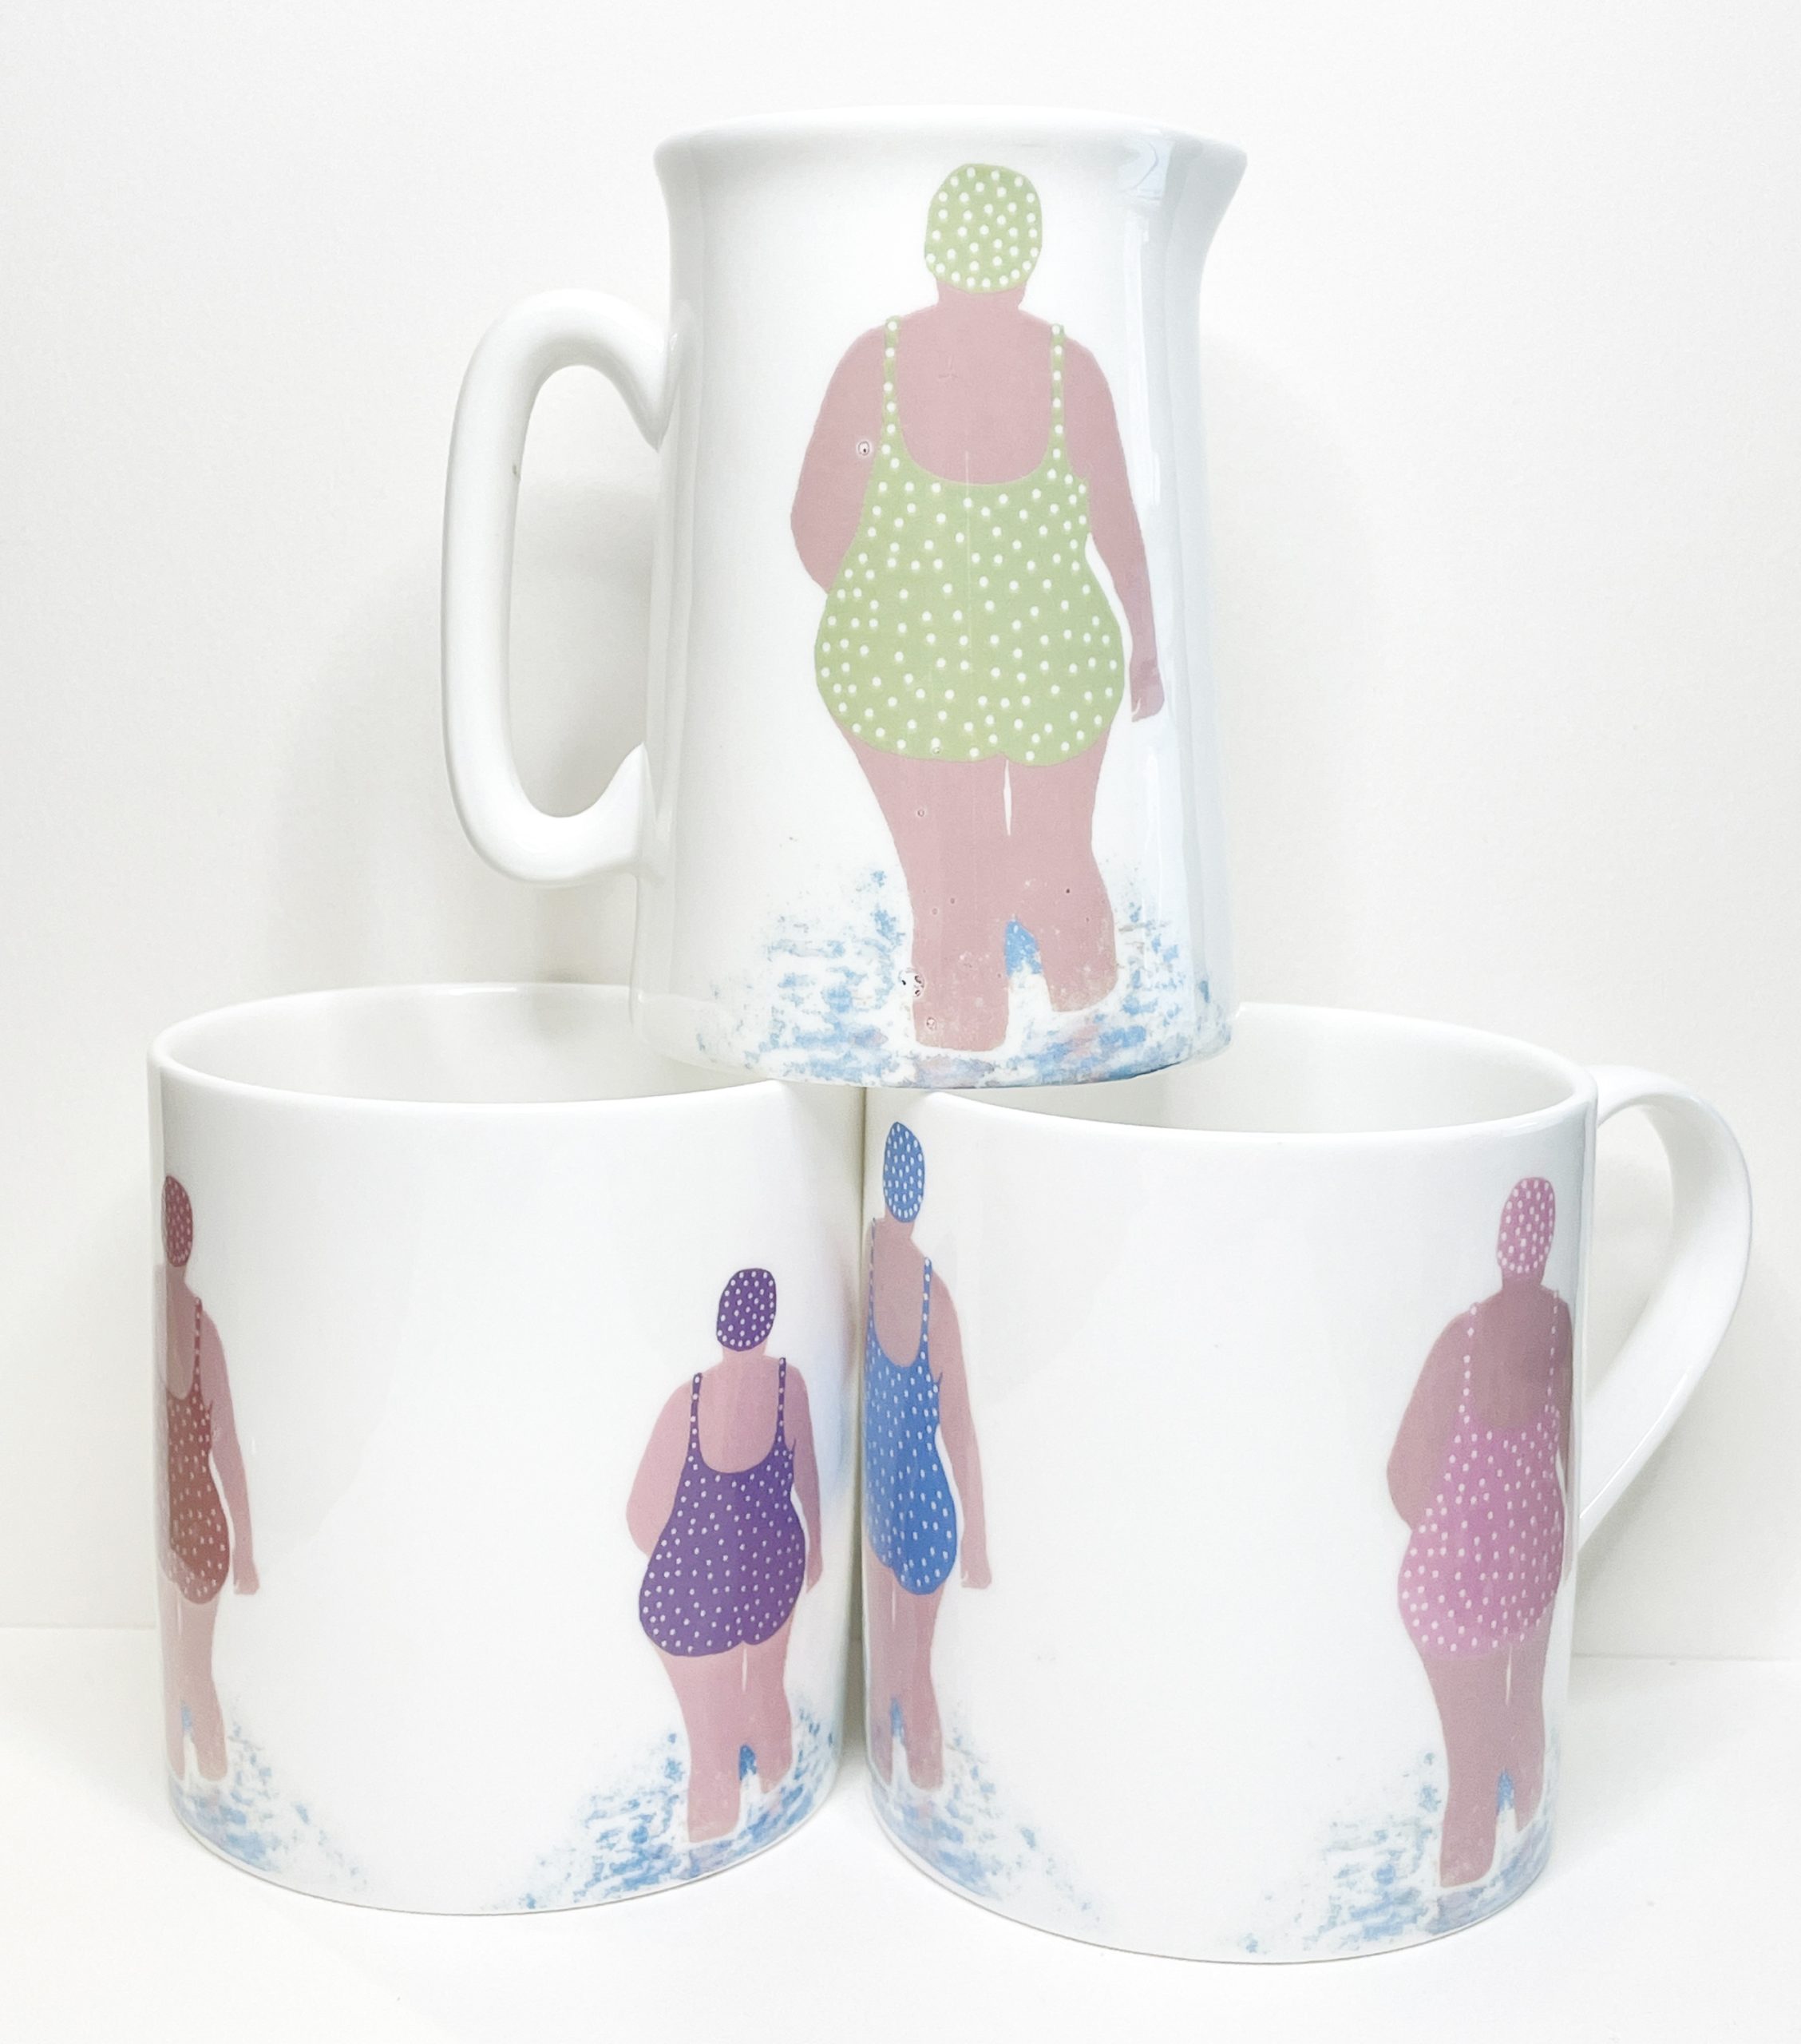 china mugs with rainbow swimmer designs